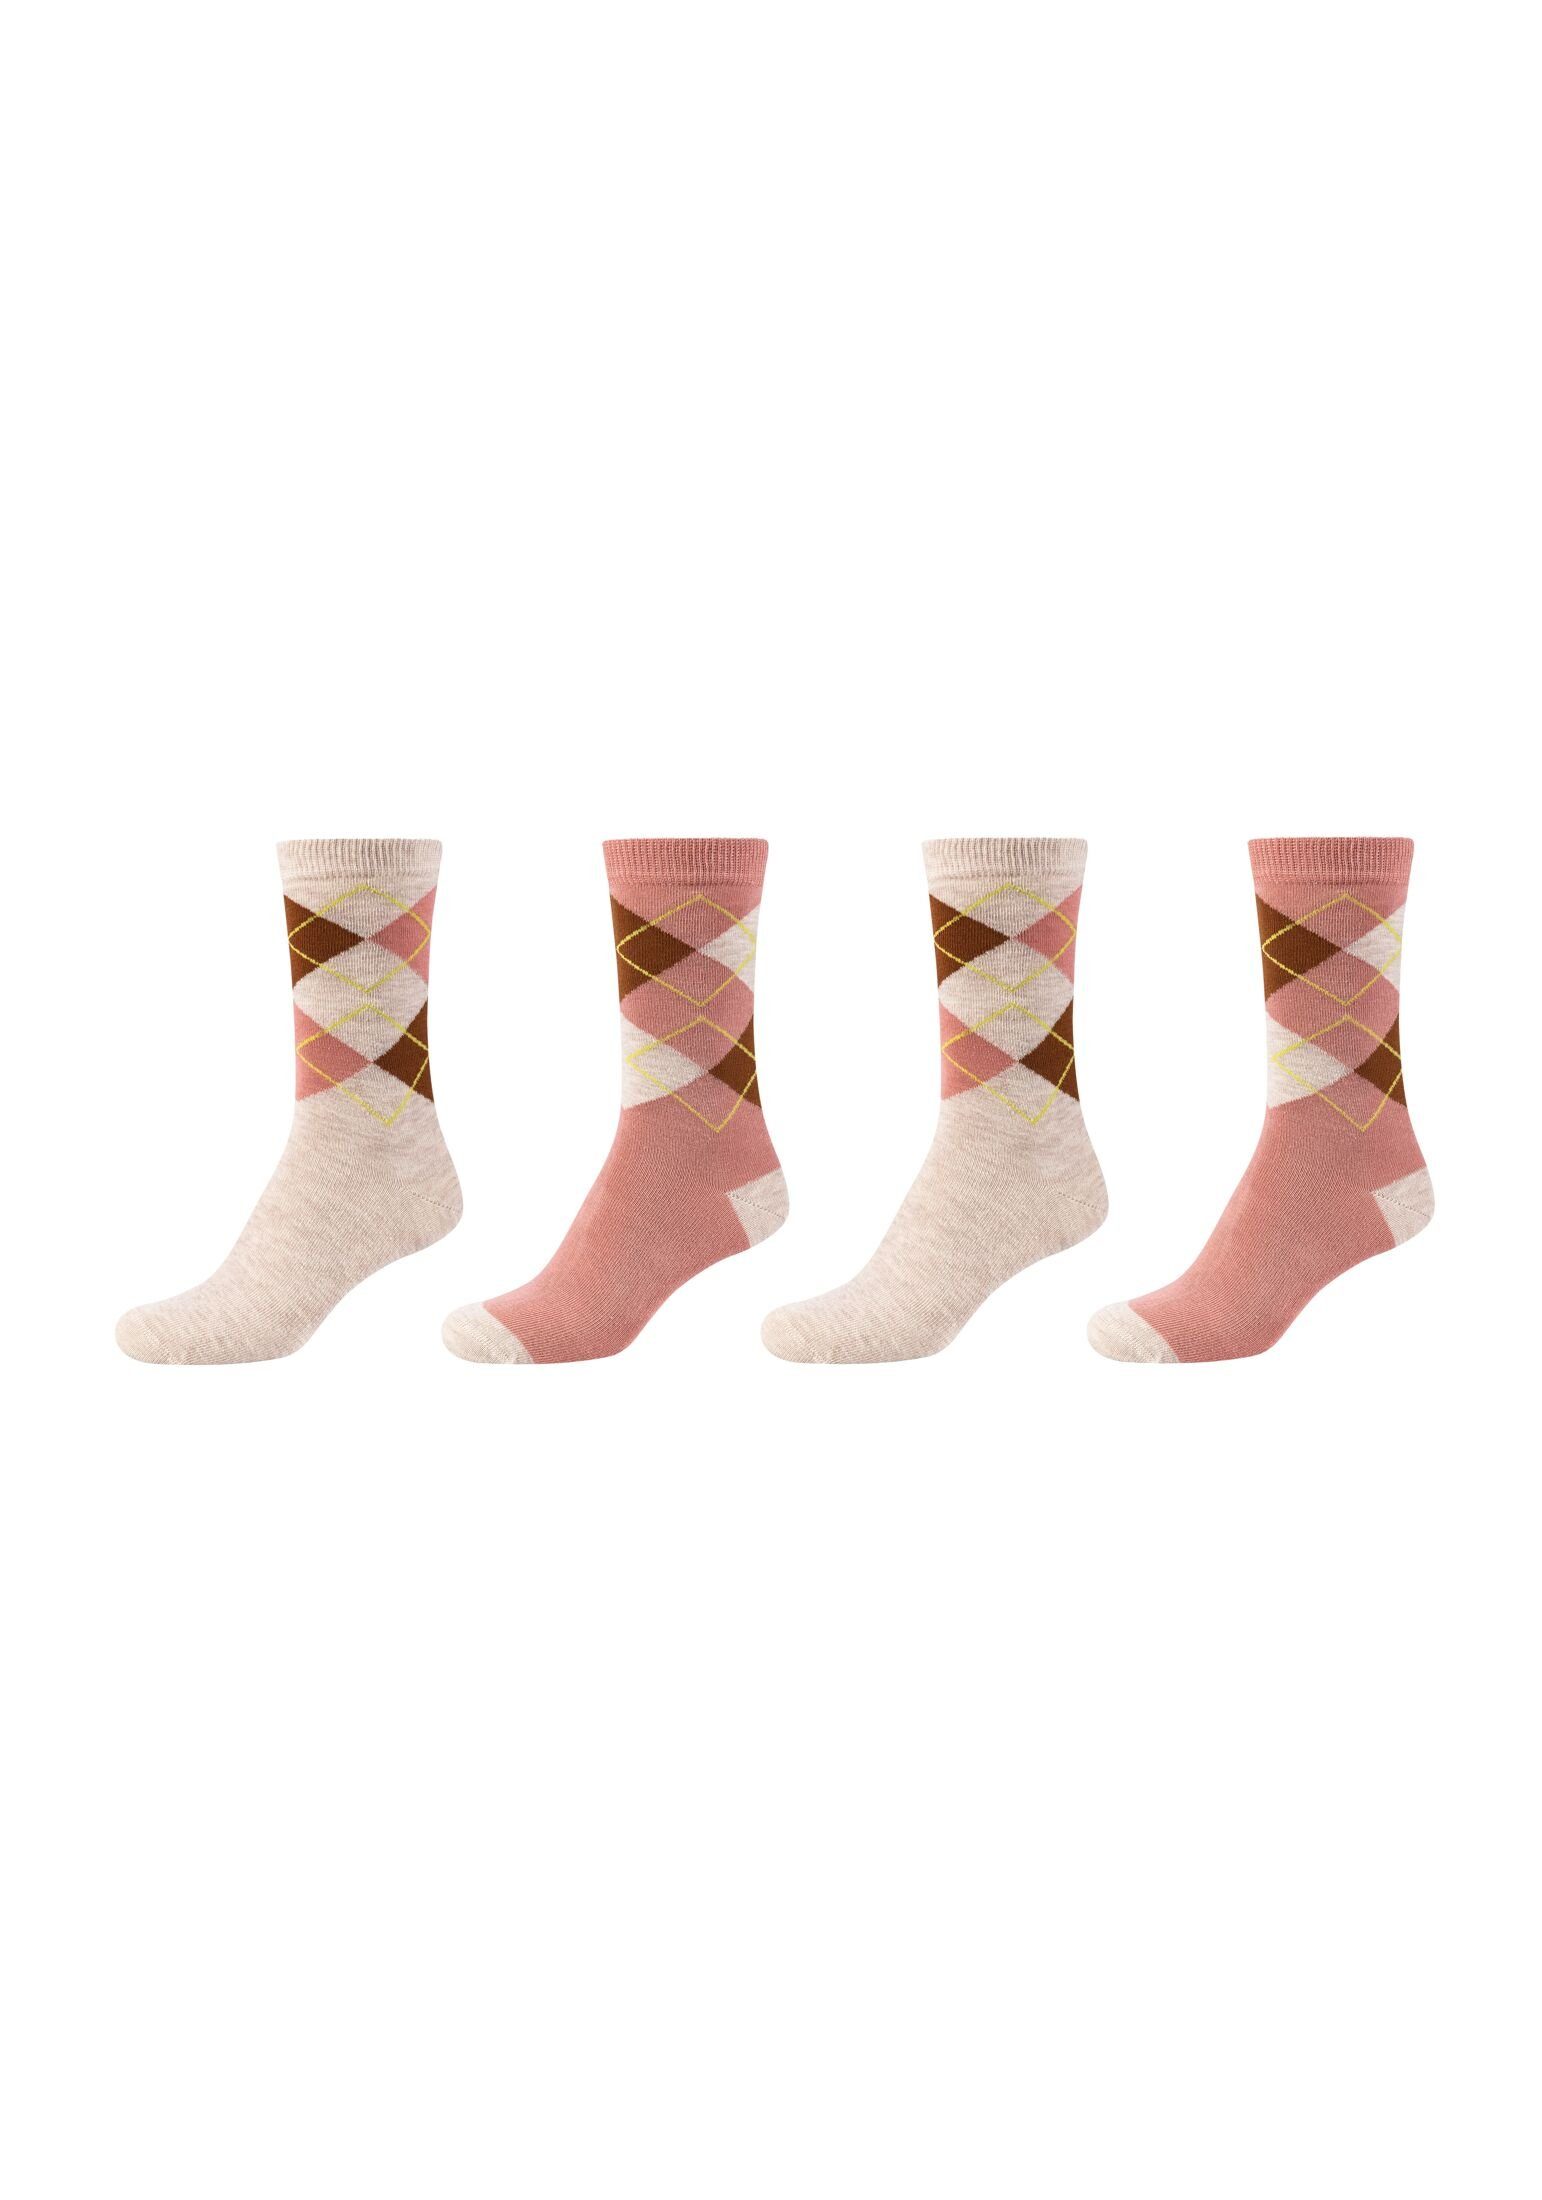 s.Oliver canyon 4er rose Socken Socken Pack